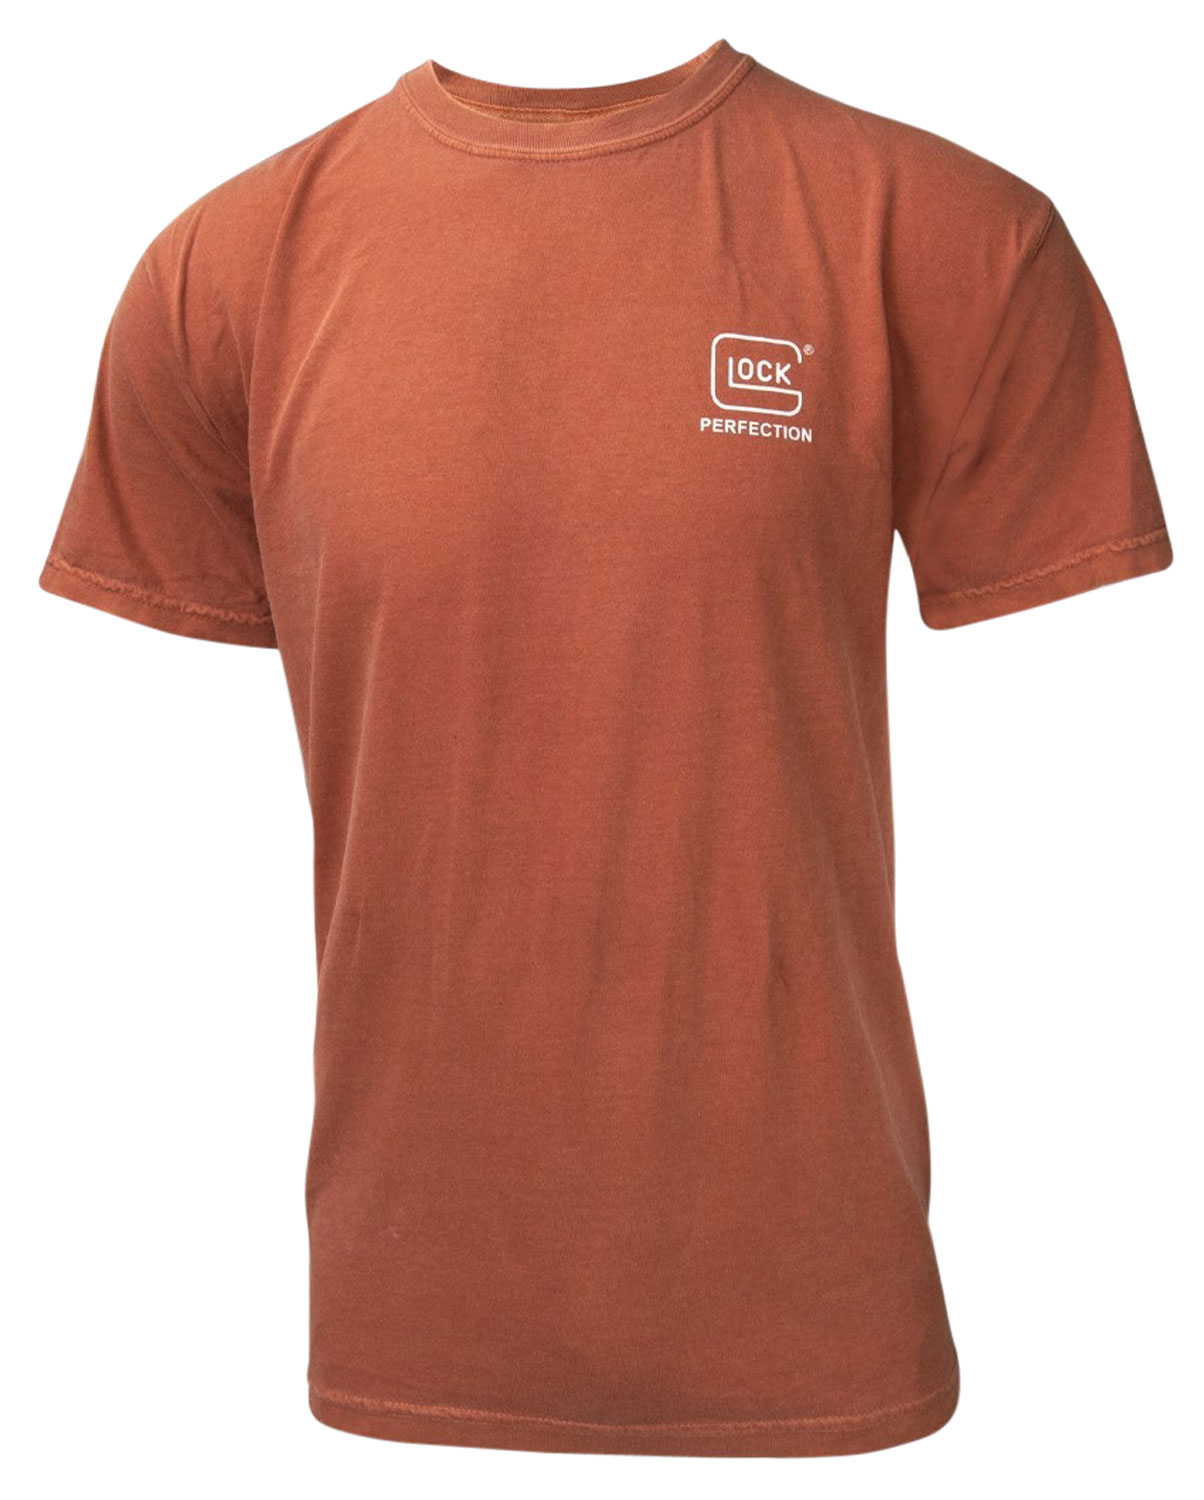 Glock AA75116 Carry With Confidence T-Shirt Rust Orange 3XL Short Sleeve